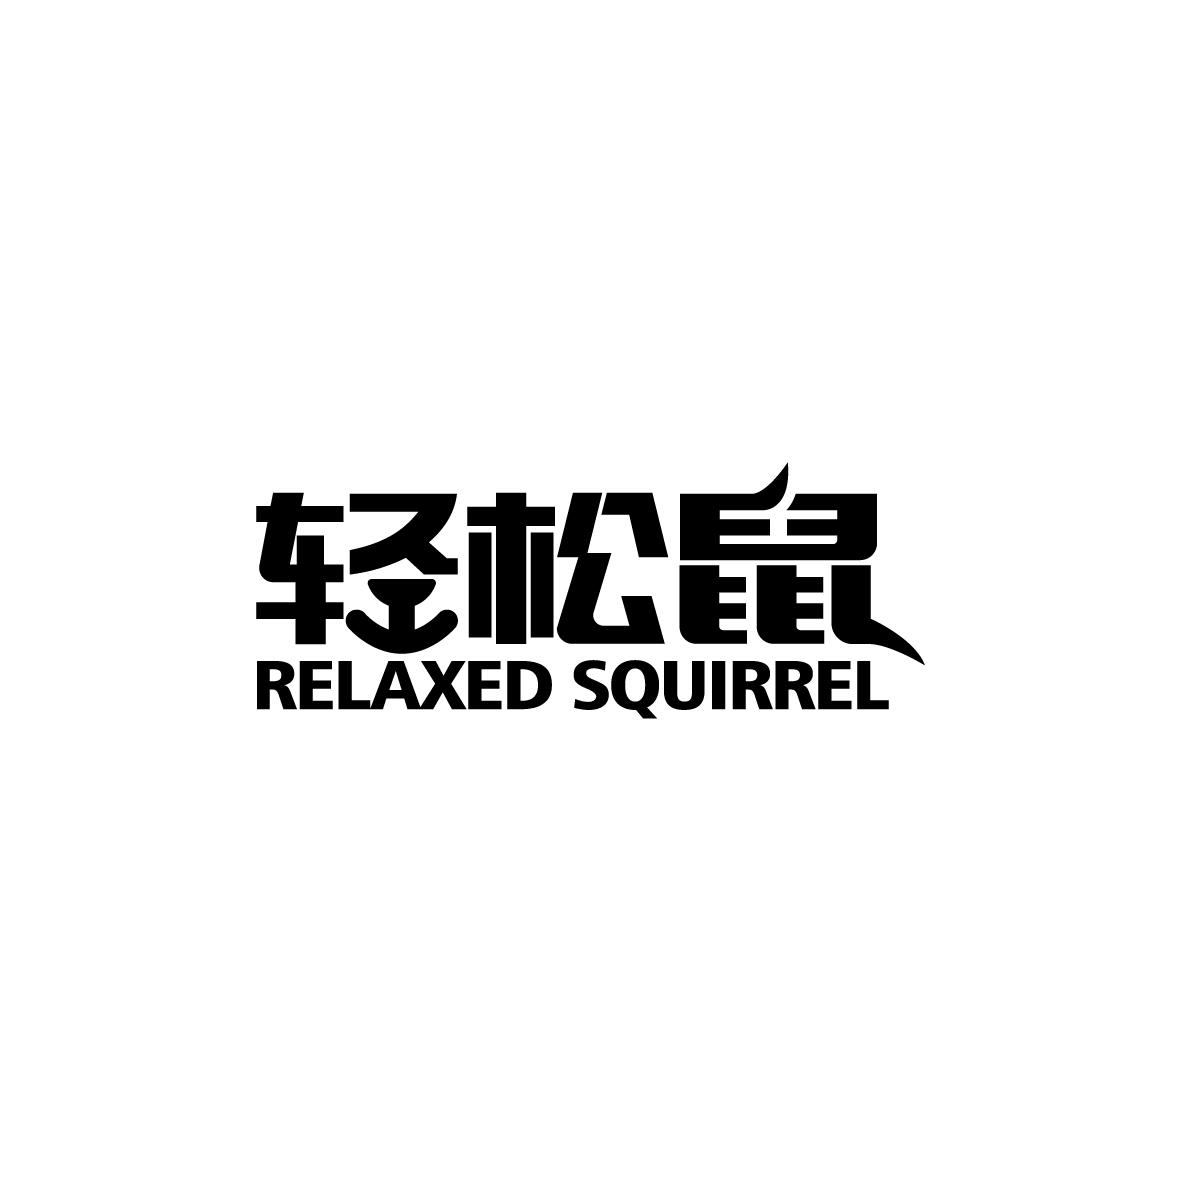 35类-广告销售轻松鼠 RELAXED SQUIRREL商标转让